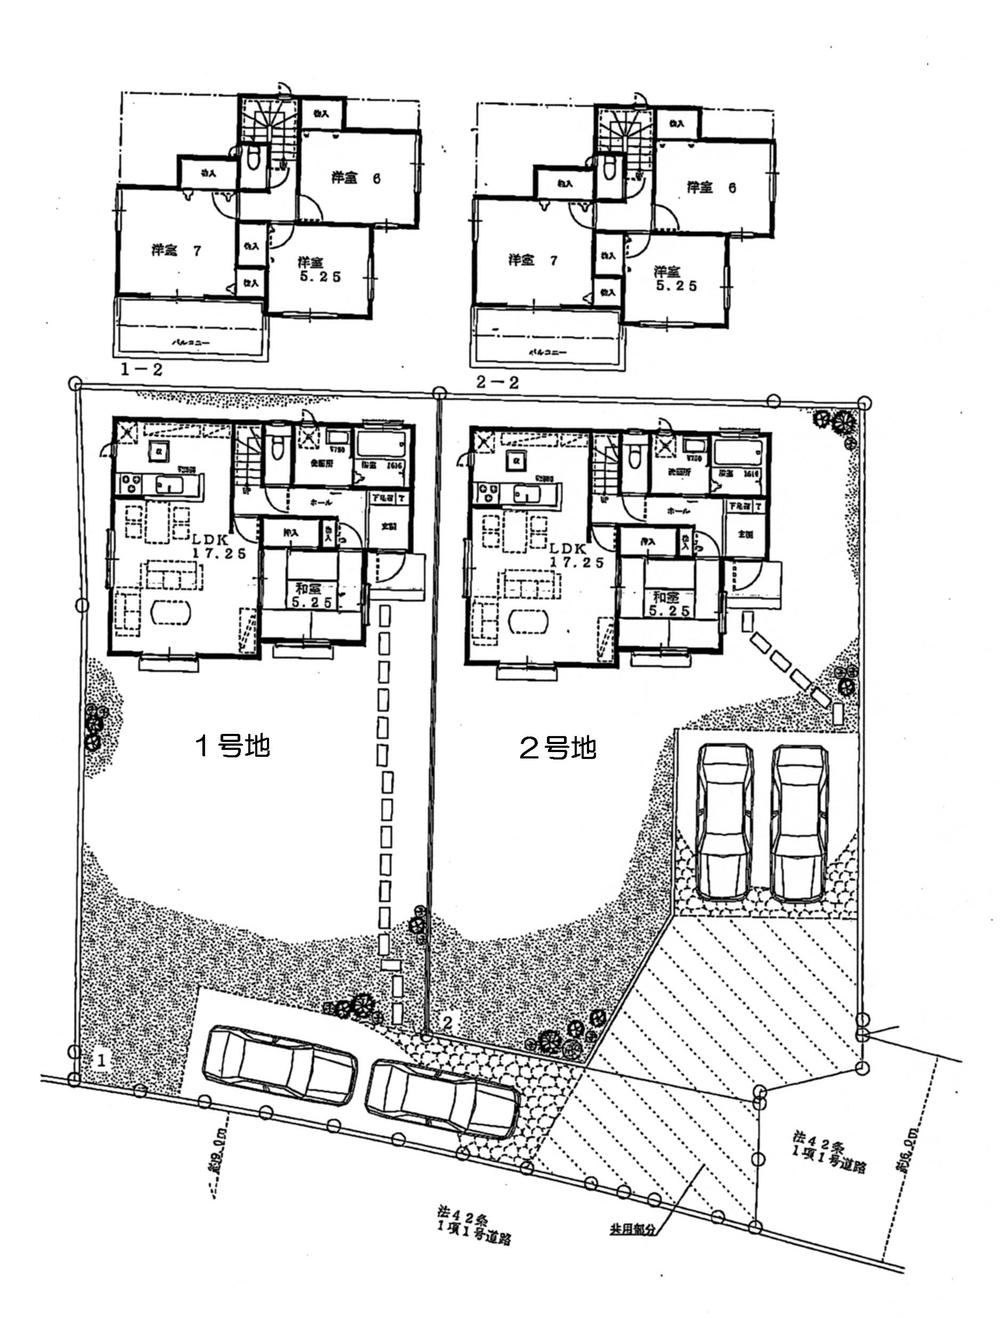 Floor plan. (1 ・ 2 Building), Price 23.8 million yen, 4LDK, Land area 262.91 sq m , Building area 98.12 sq m